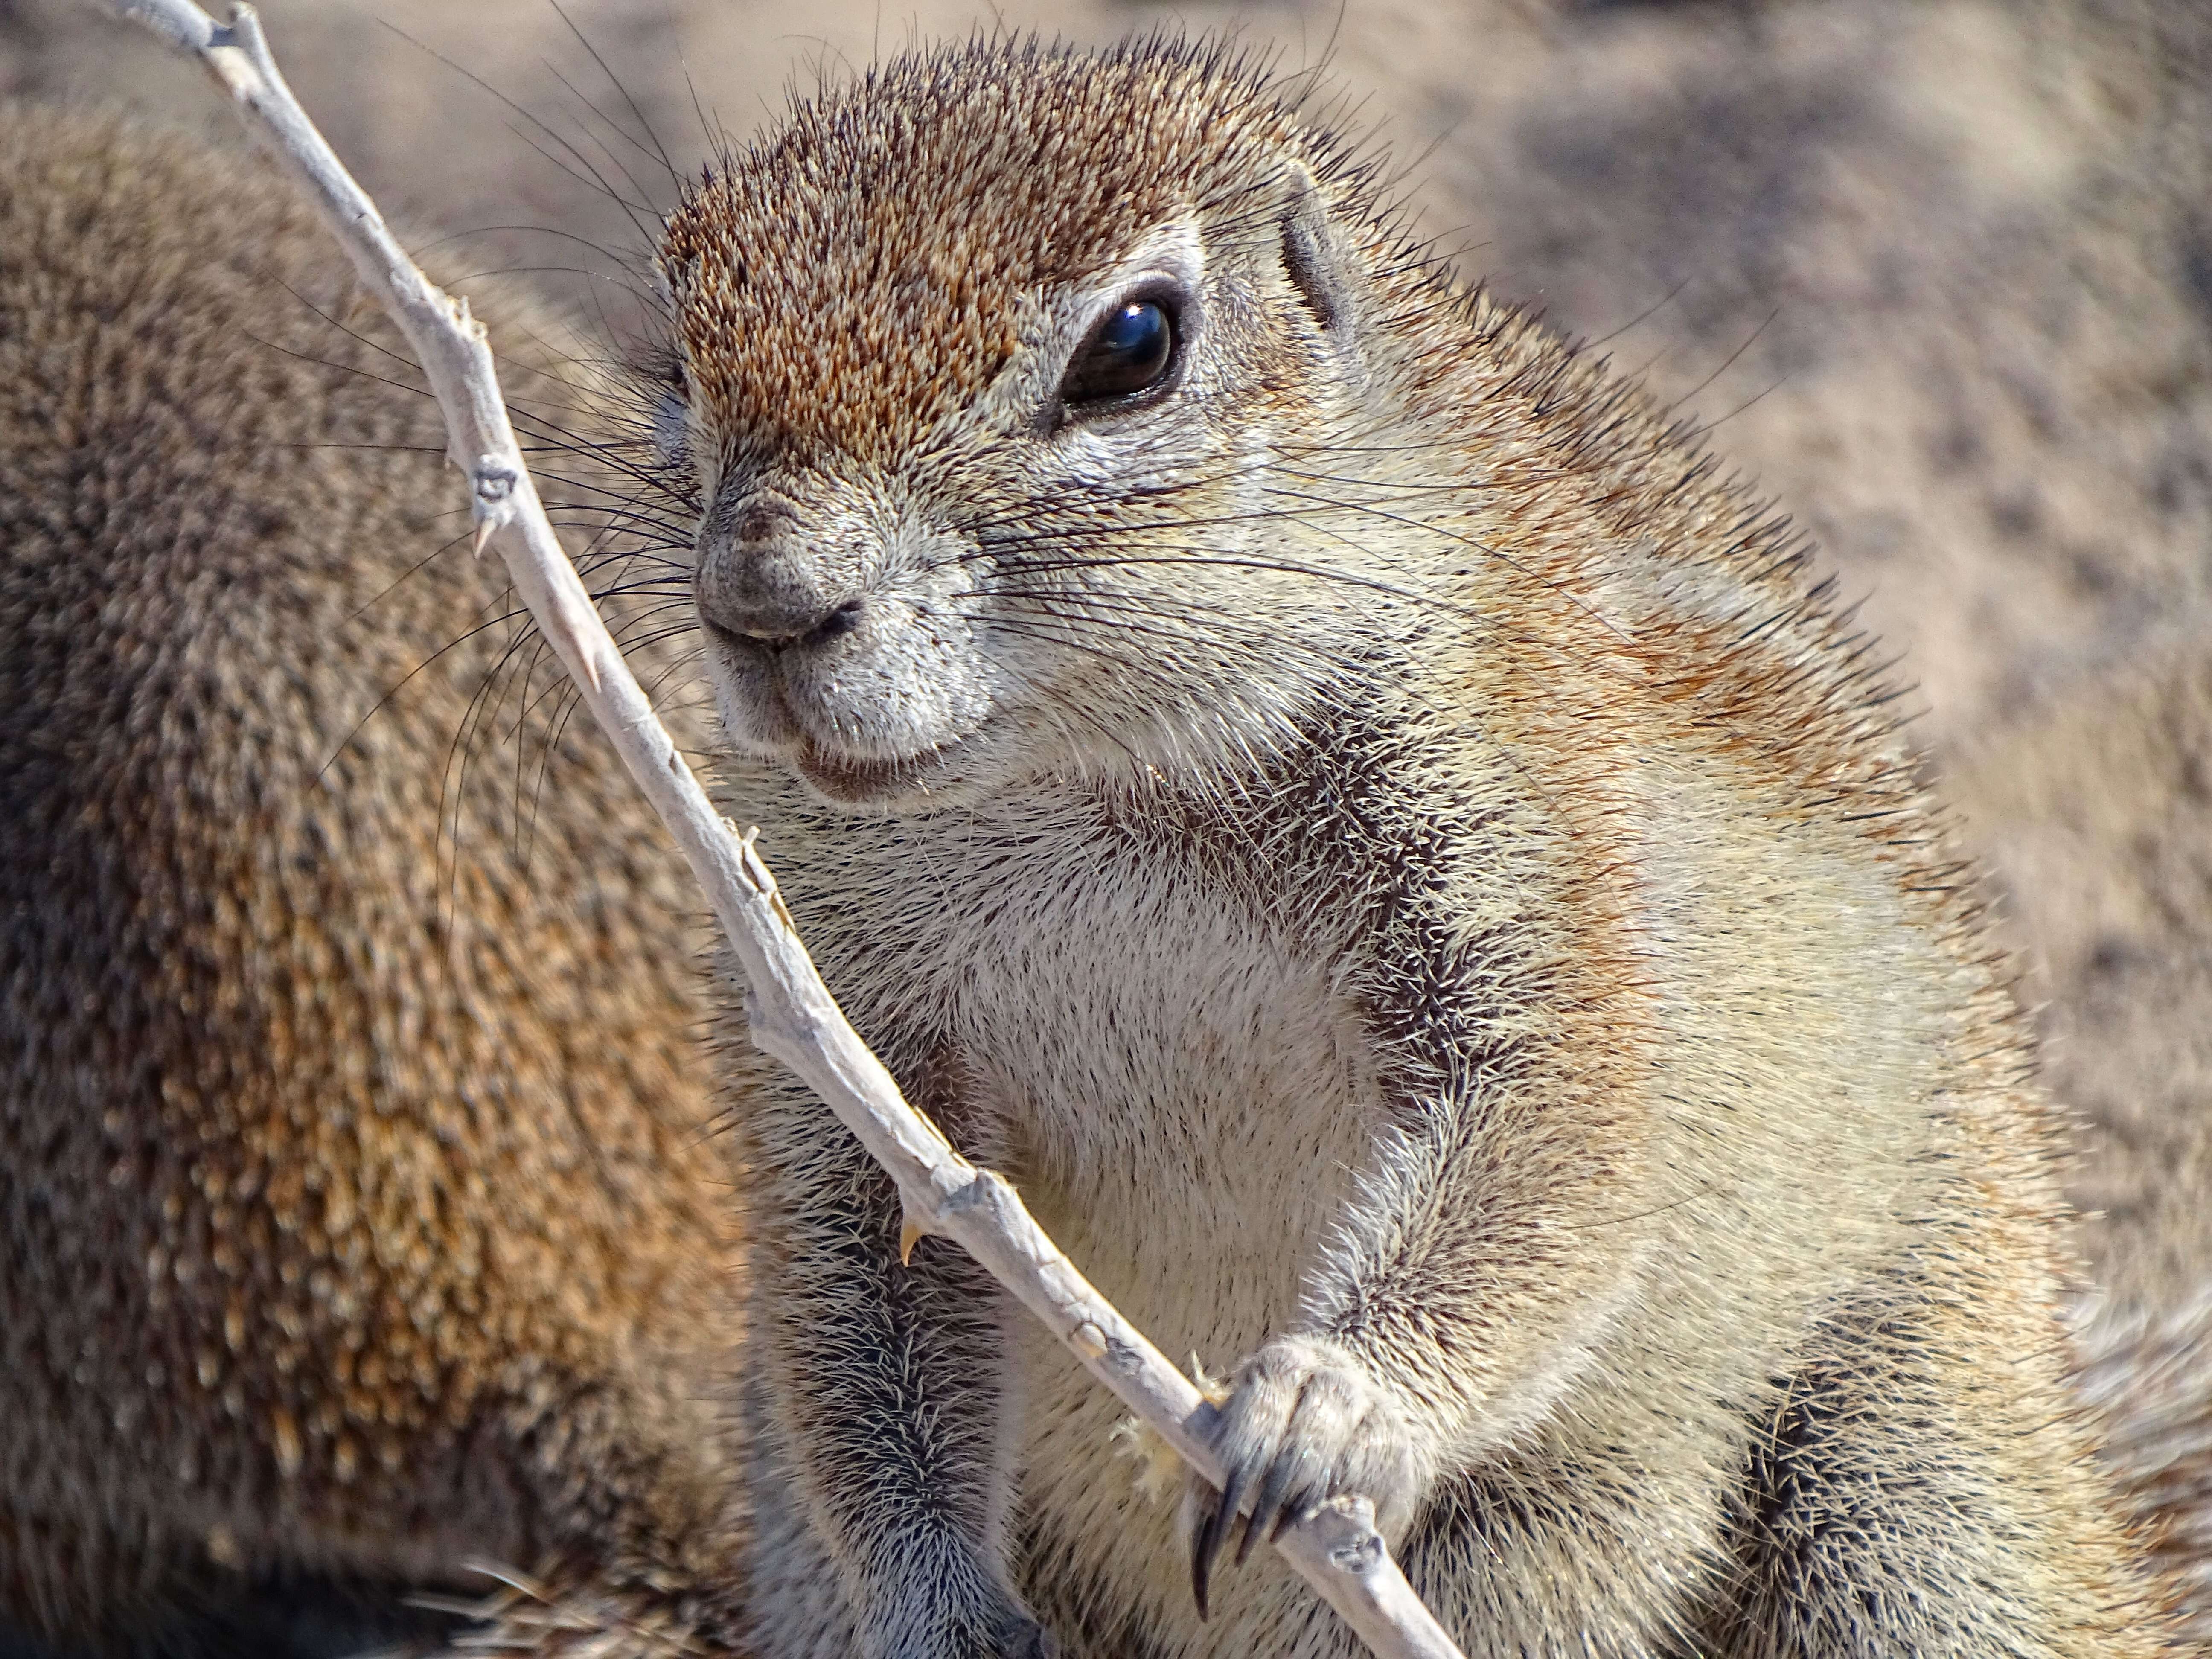 Image of Damara Ground Squirrel